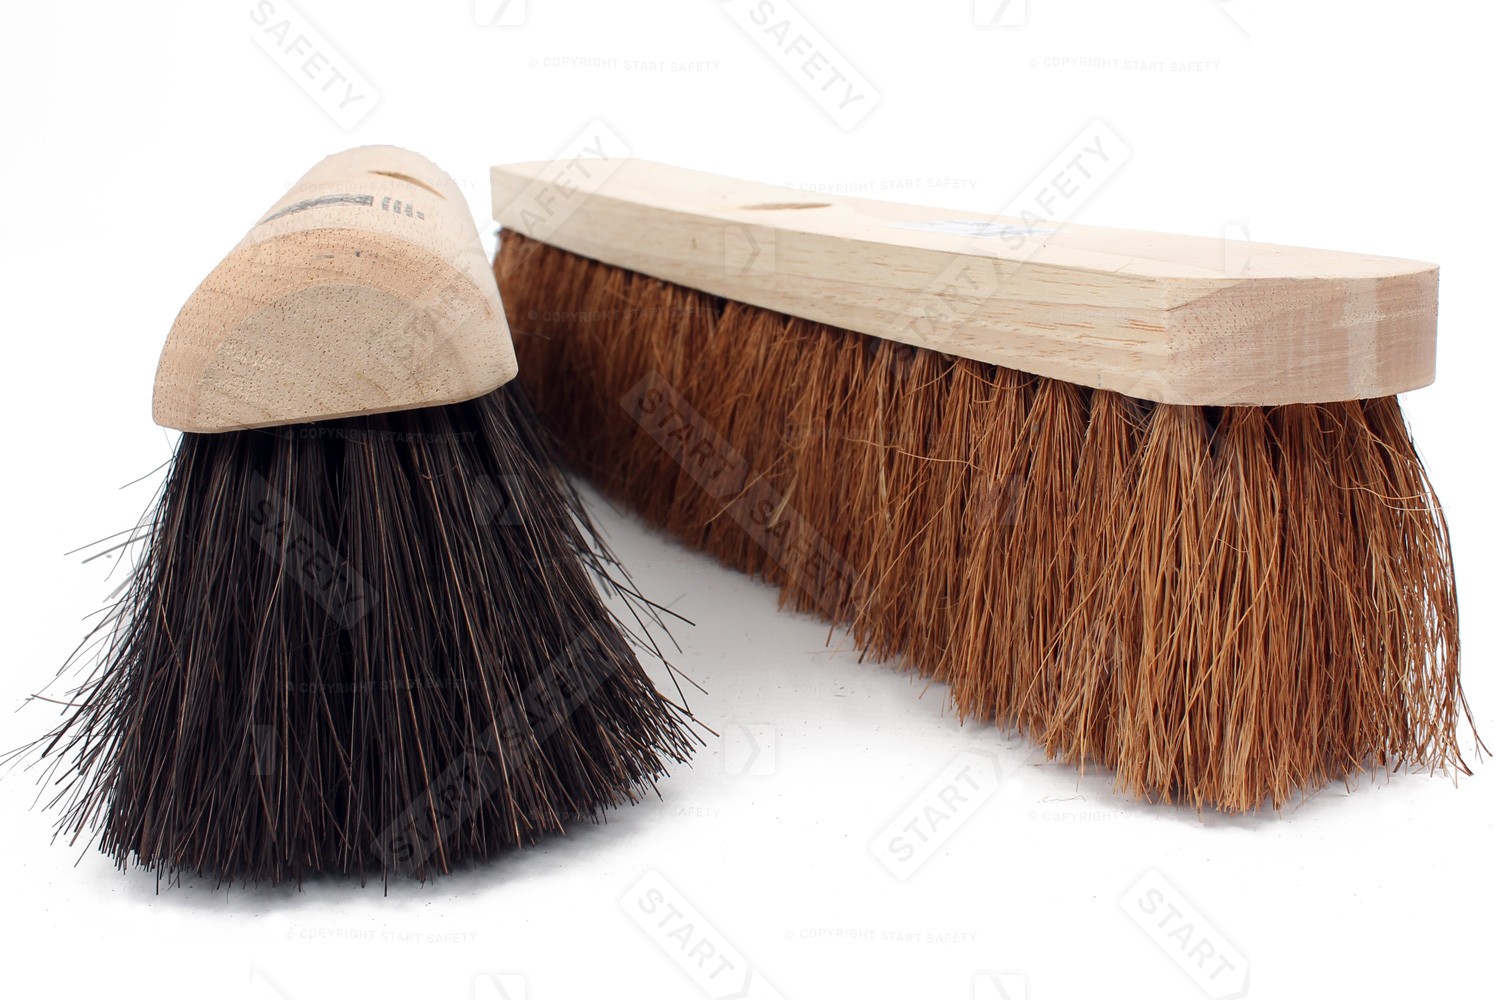 Flat Top or Round Top Broom Head